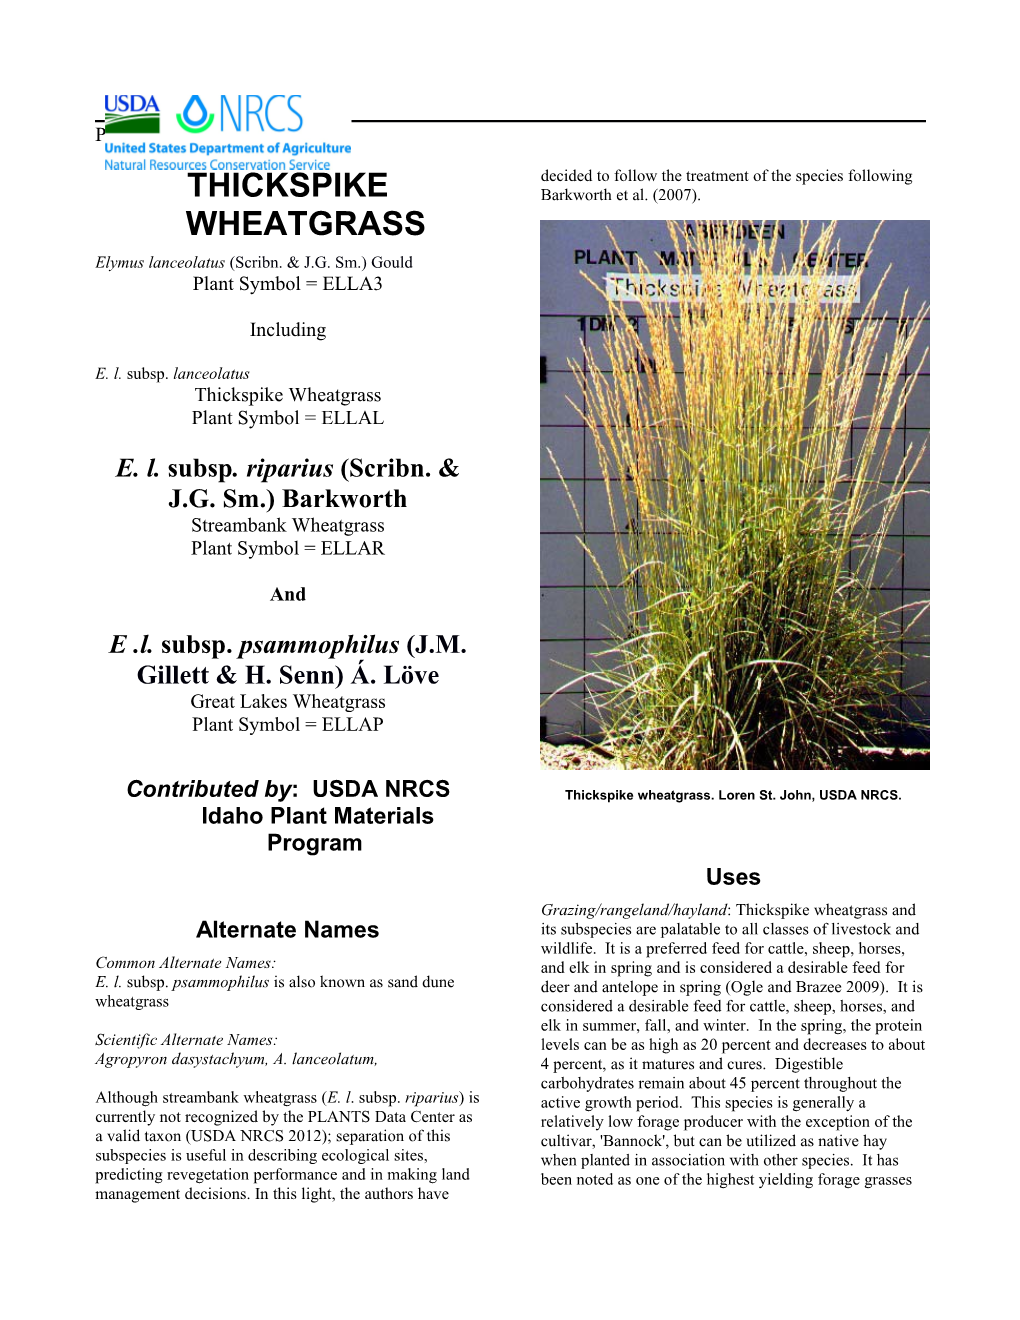 Plant Guide for Thickspike Wheatgrass (Elymus Lanceolatus)